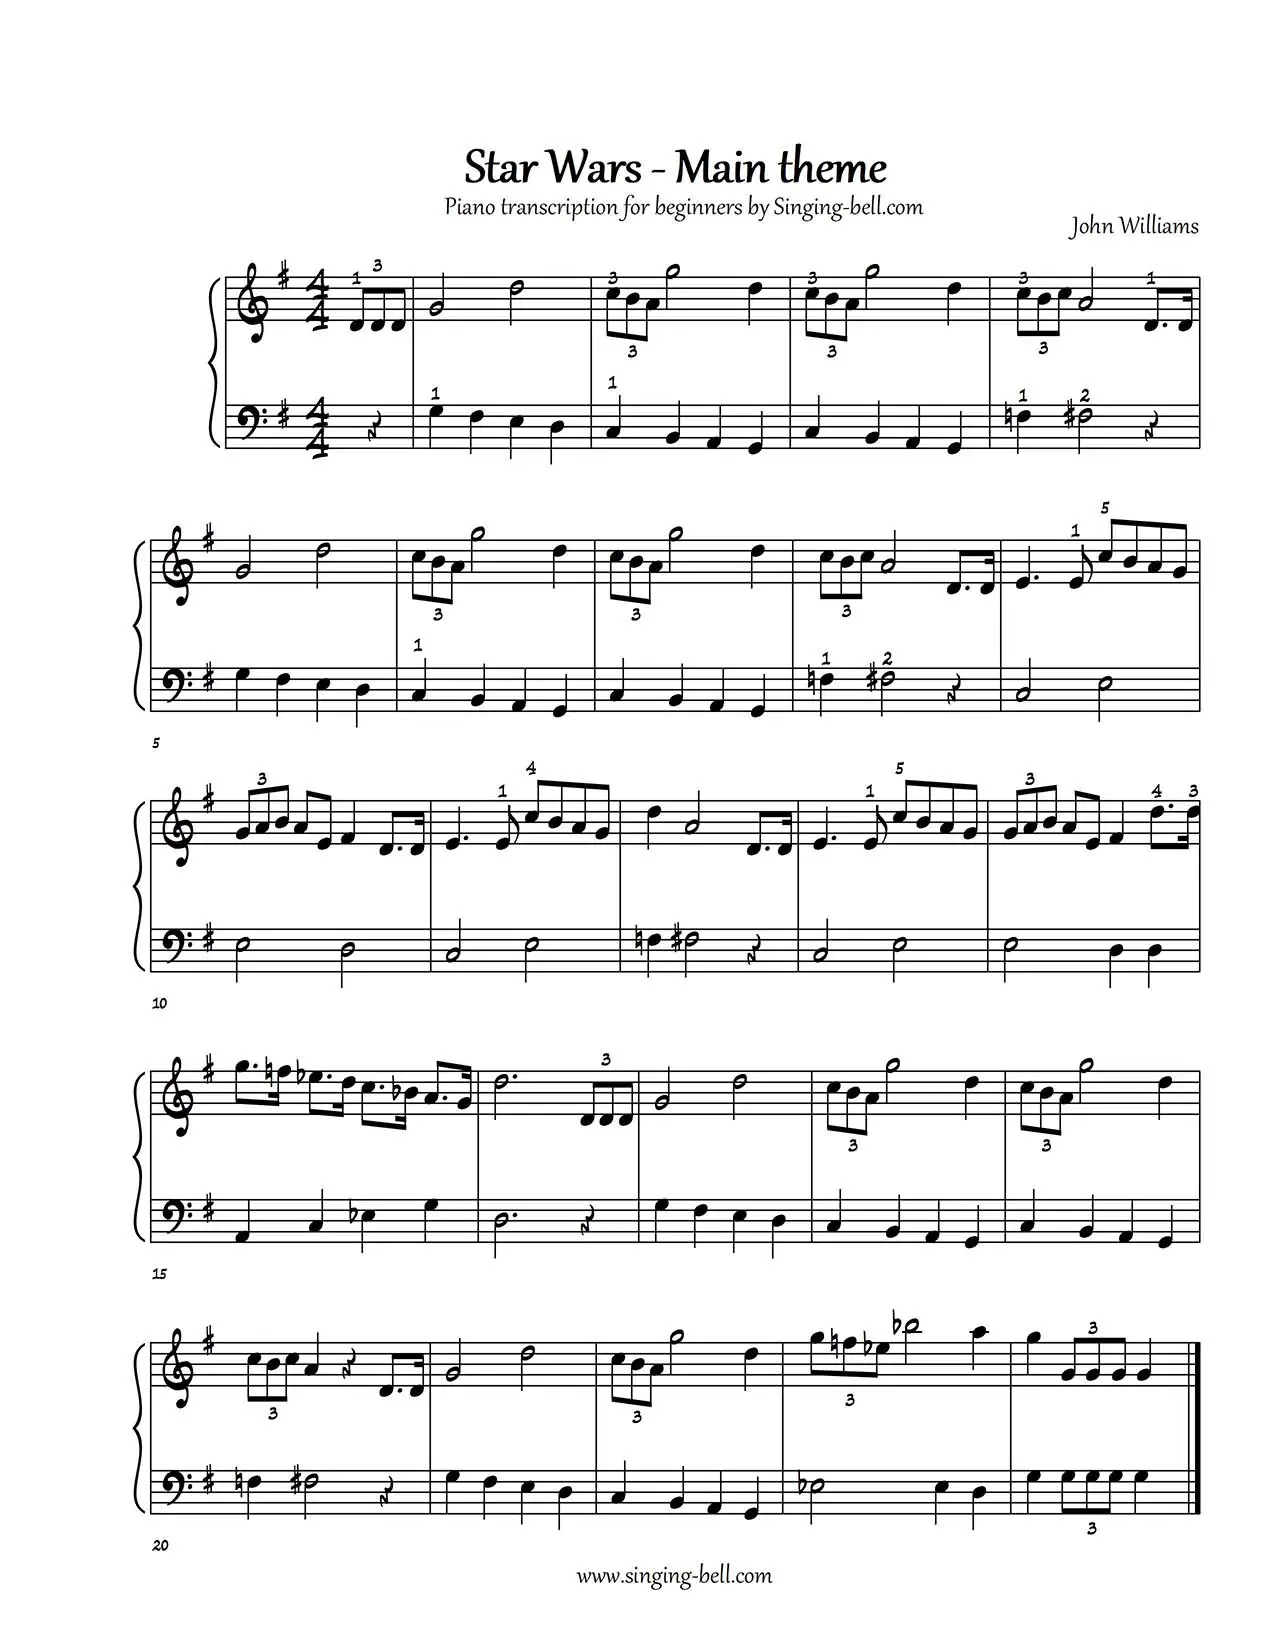 Star Wars Main Theme easy piano sheet music notes beginners pdf